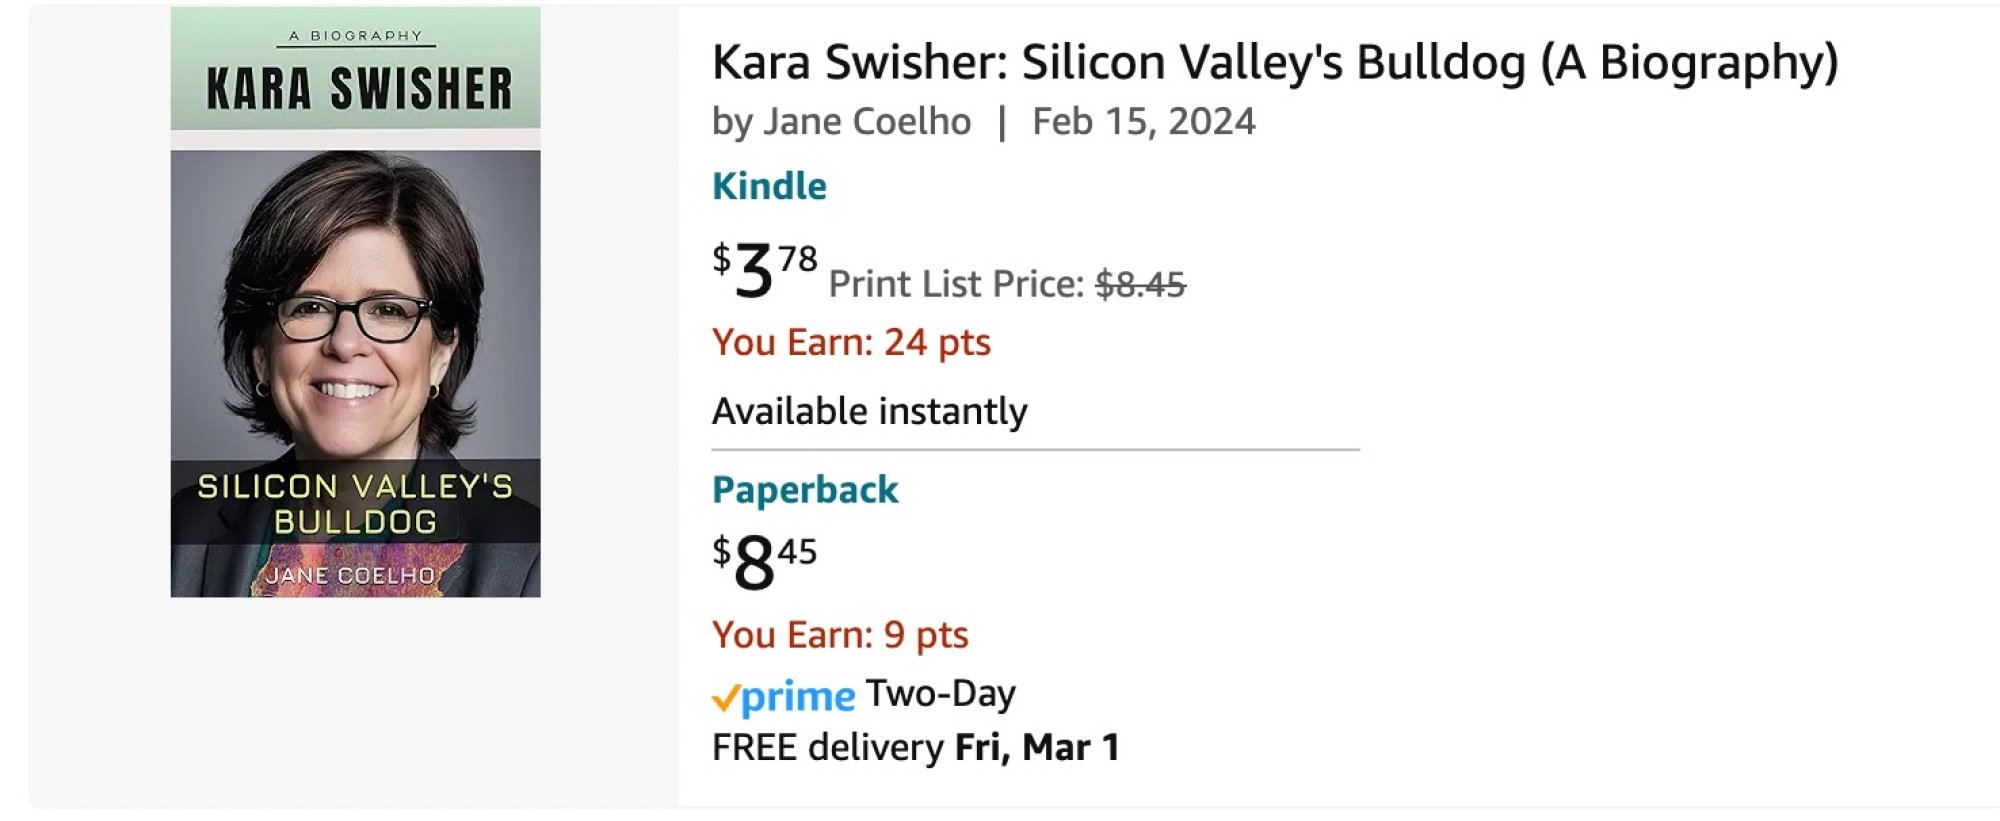 a book about Kara Swisher on Amazon